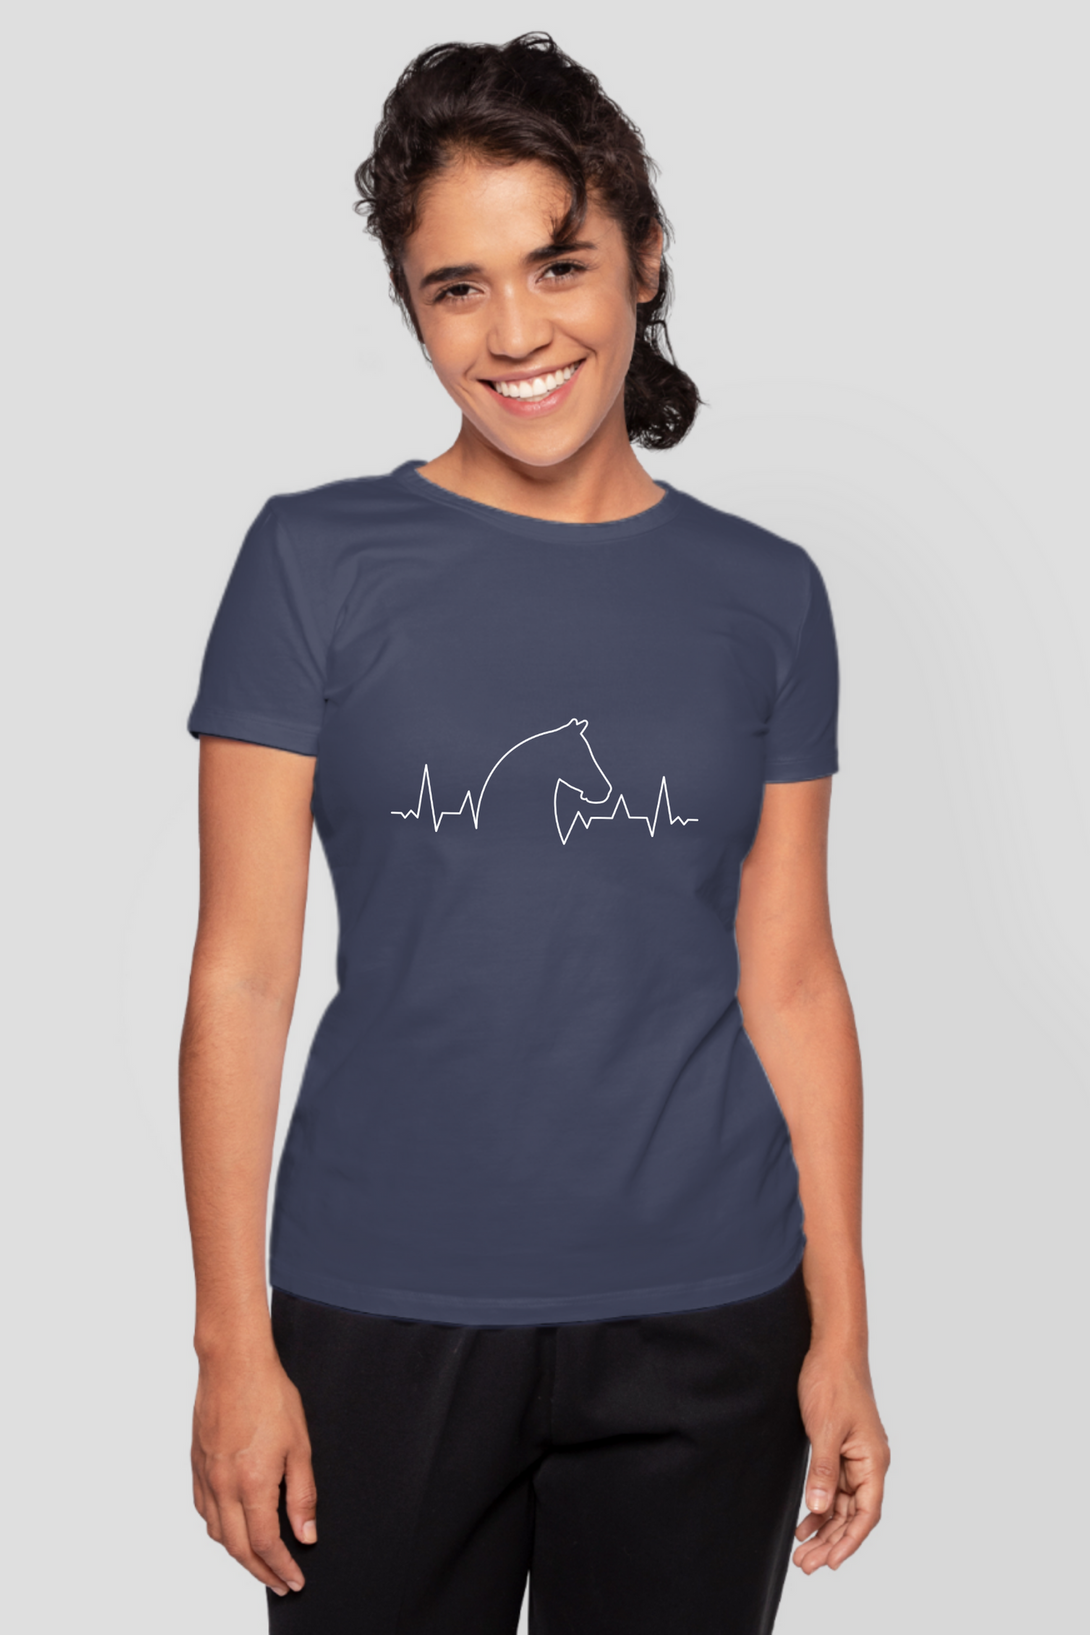 Horse Heartbeat Printed T-Shirt For Women - WowWaves - 8